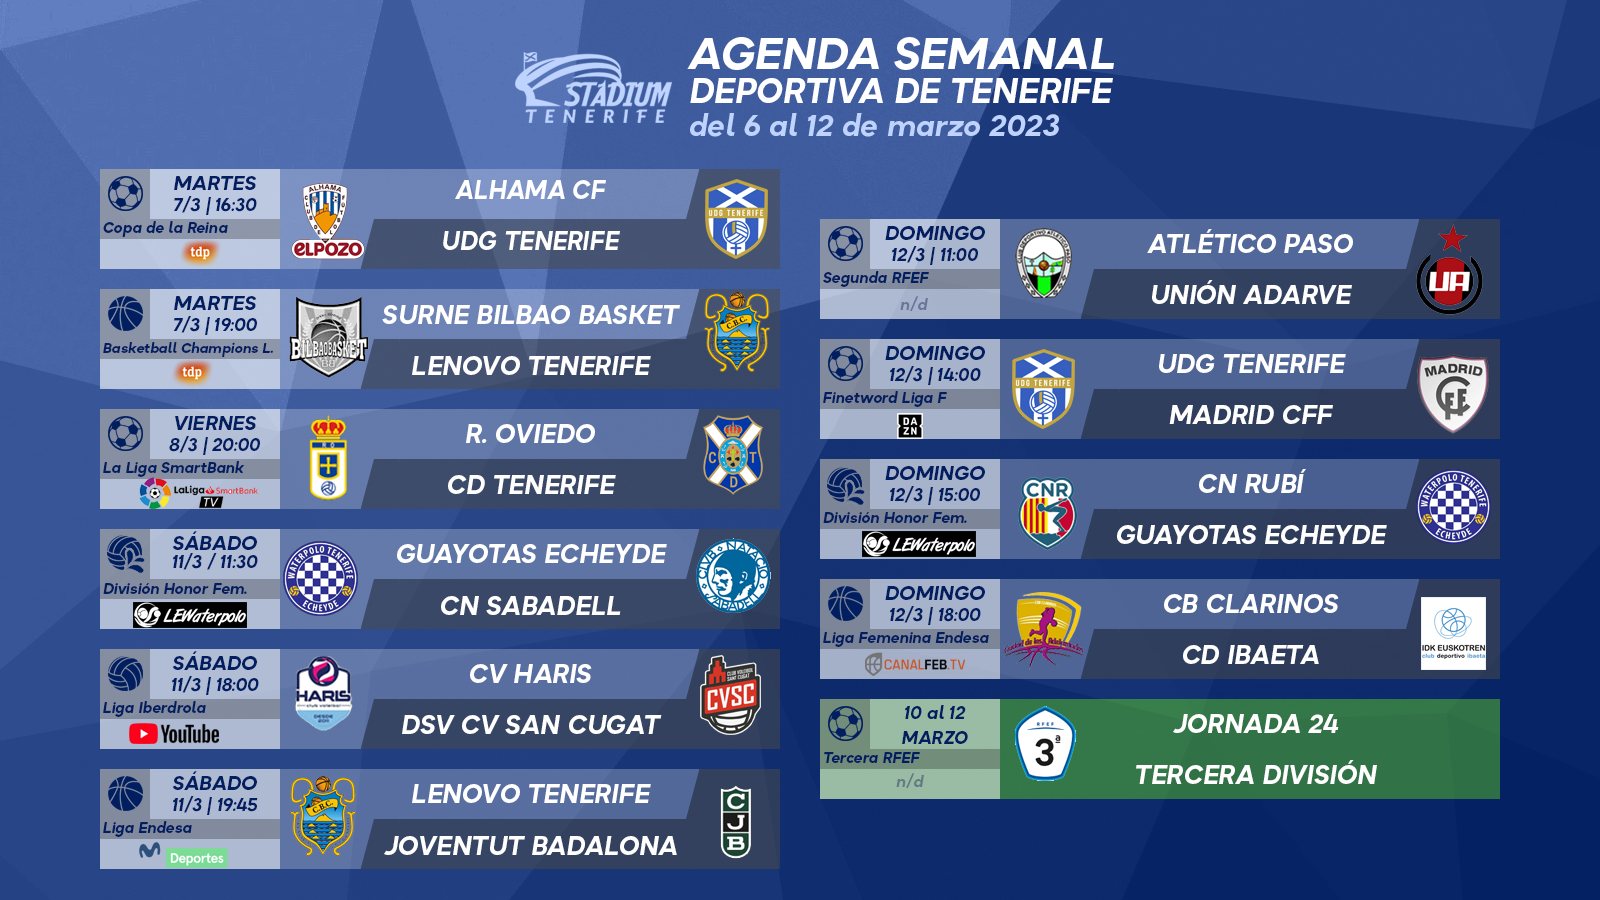 Agenda Semanal Deportiva de Tenerife (6 al 12 de marzo)